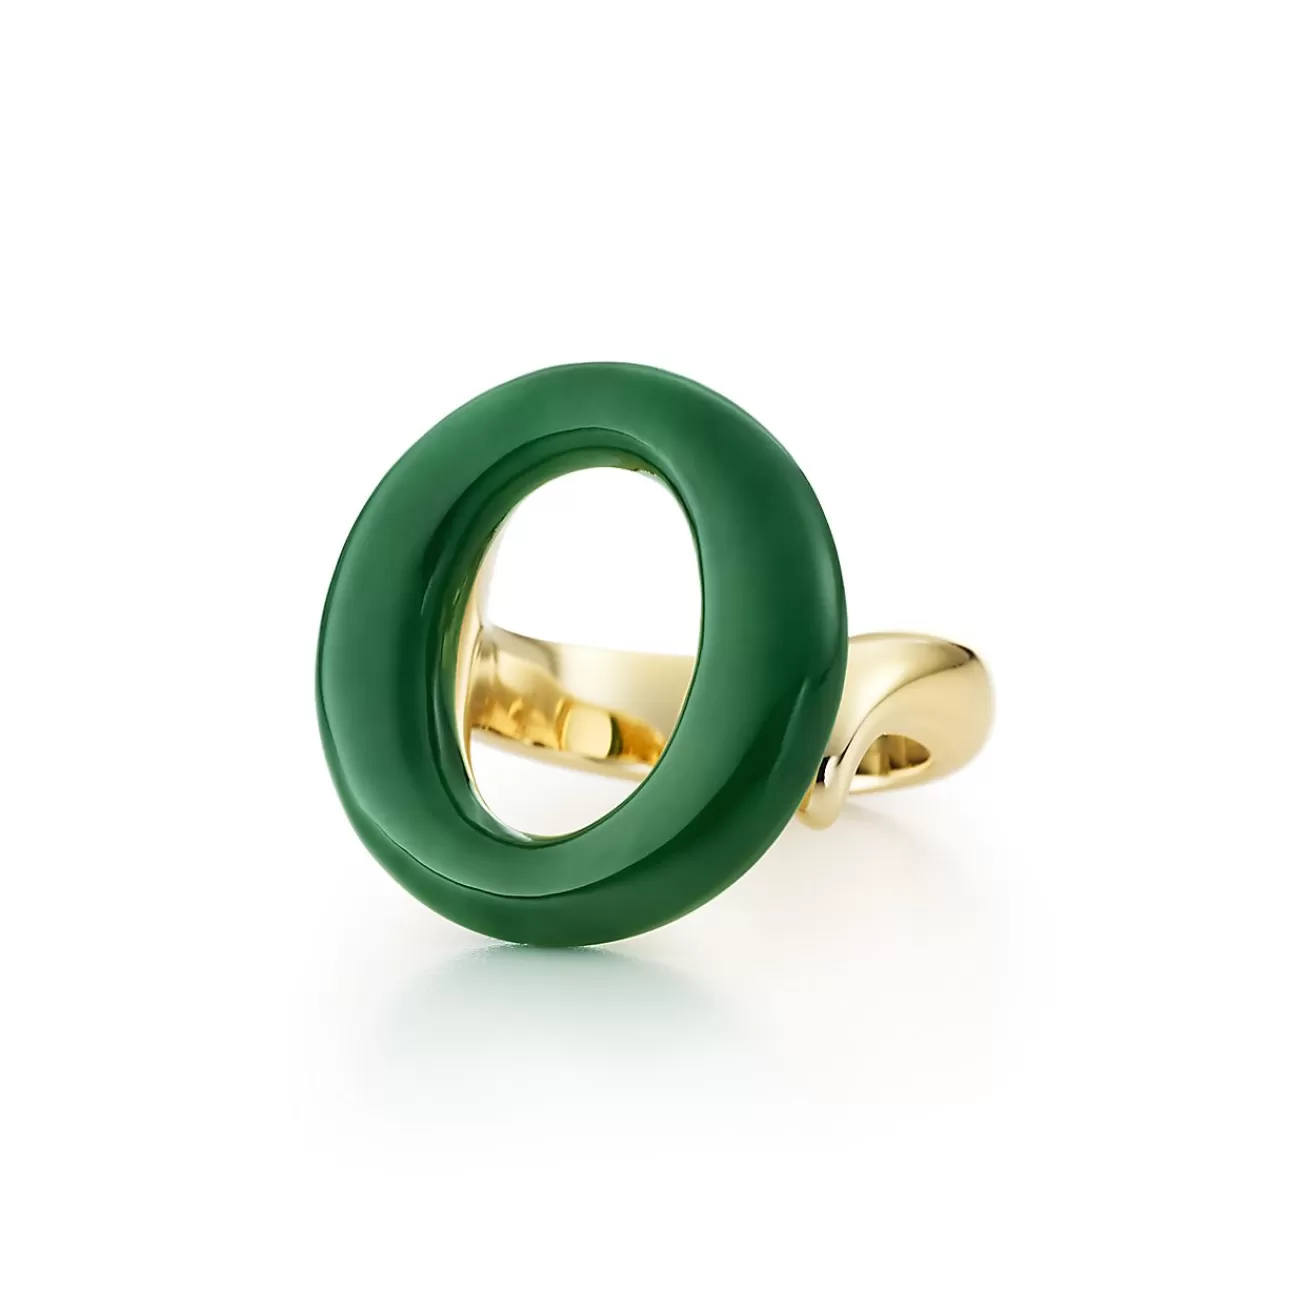 Tiffany & Co. Elsa Peretti® Sevillana™ Ring in 18k gold with green jade. | ^ Rings | Gold Jewelry